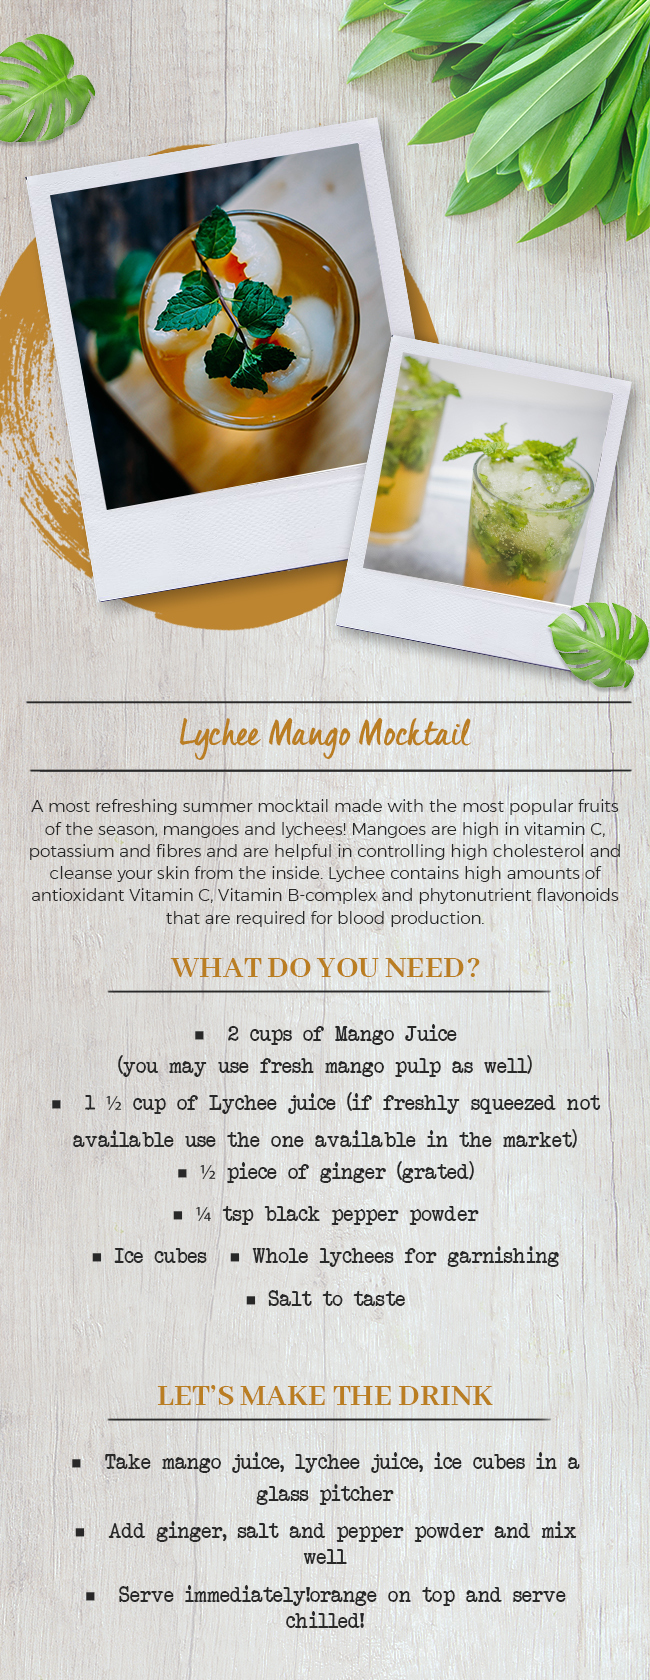 lychee-mango-mocktail